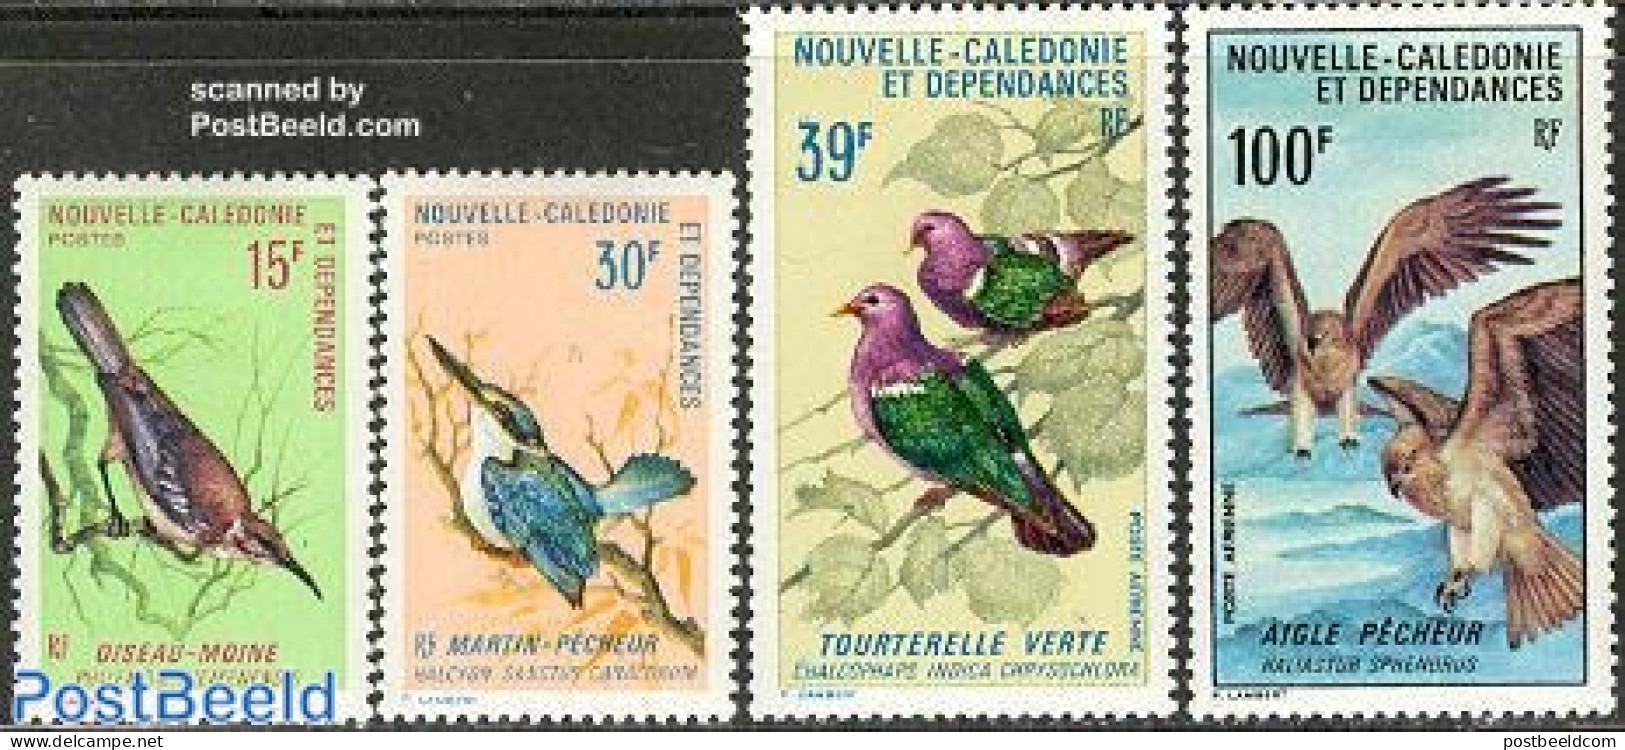 New Caledonia 1970 Birds 4v, Unused (hinged), Nature - Birds - Kingfishers - Pigeons - Nuevos